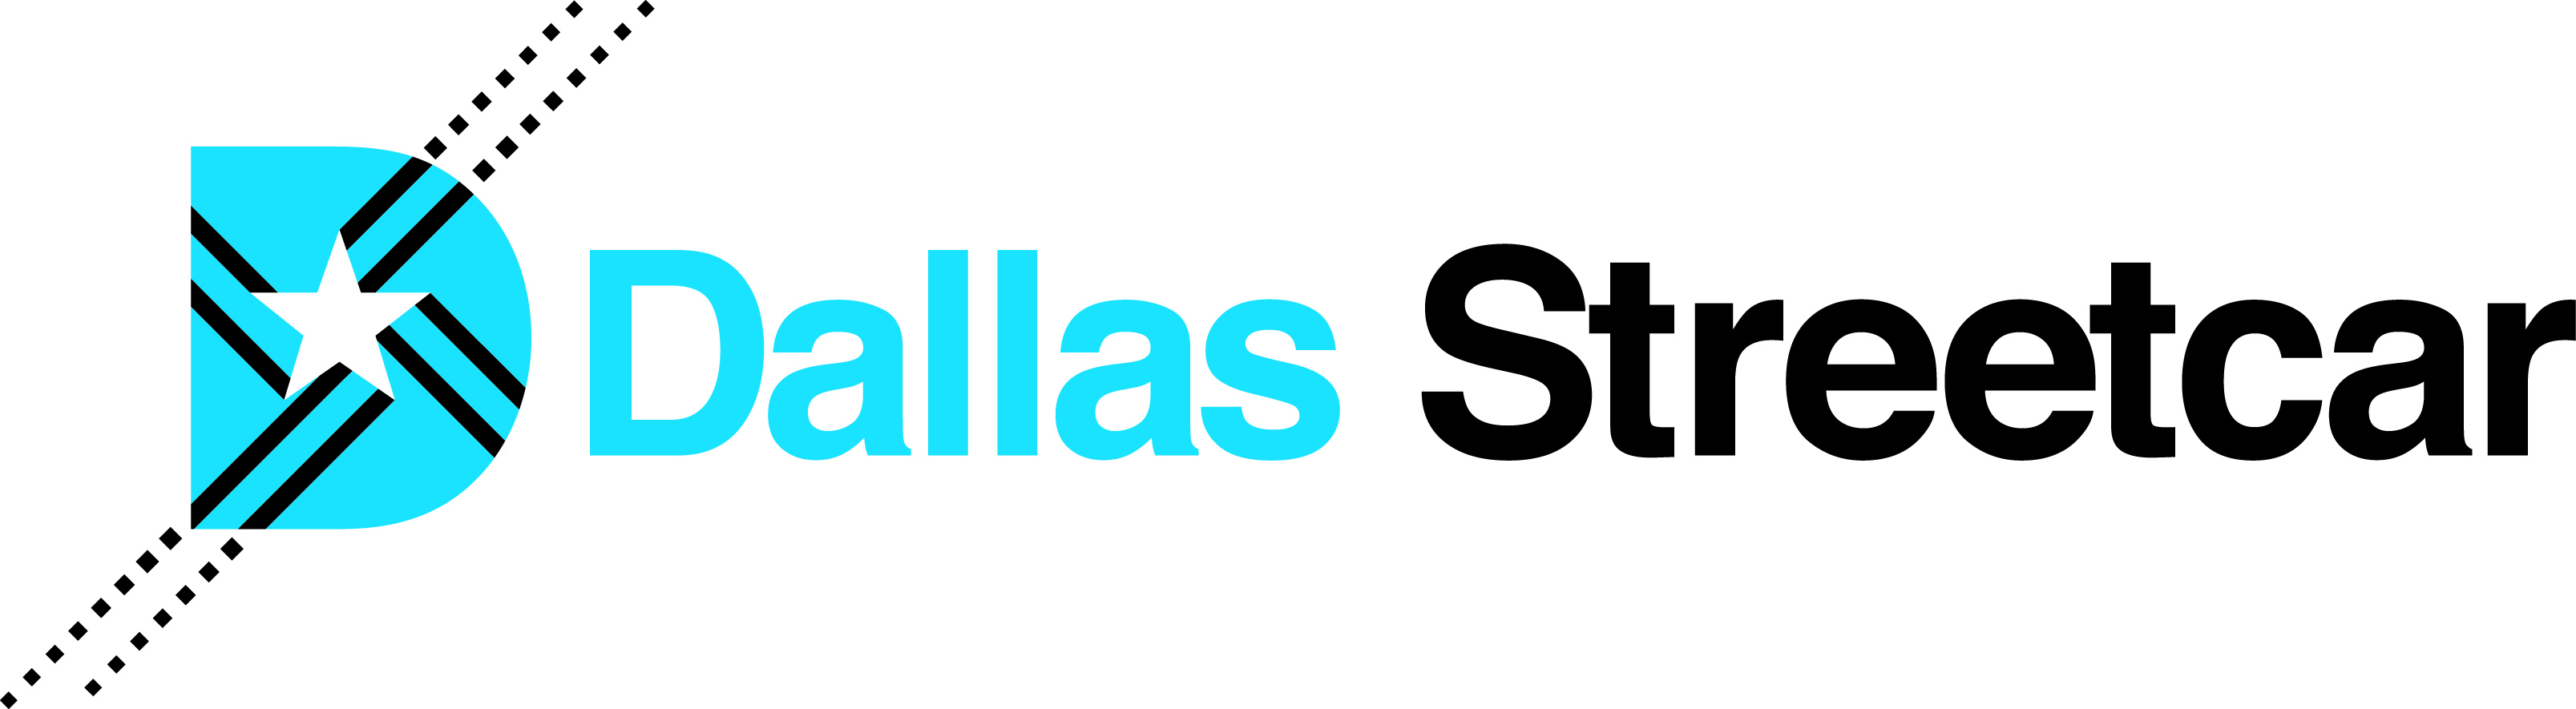 The official logo of Dallas Streetcar